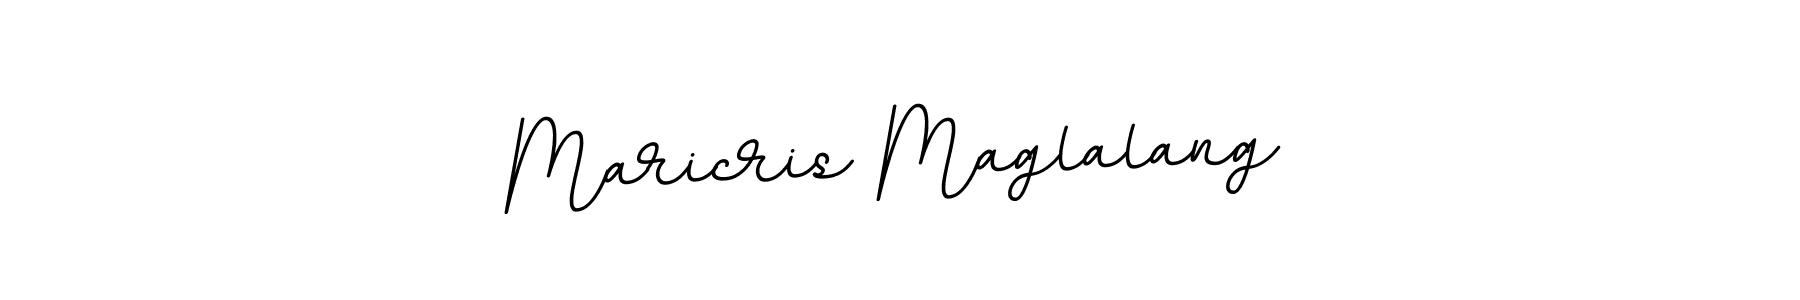 How to Draw Maricris Maglalang signature style? BallpointsItalic-DORy9 is a latest design signature styles for name Maricris Maglalang. Maricris Maglalang signature style 11 images and pictures png